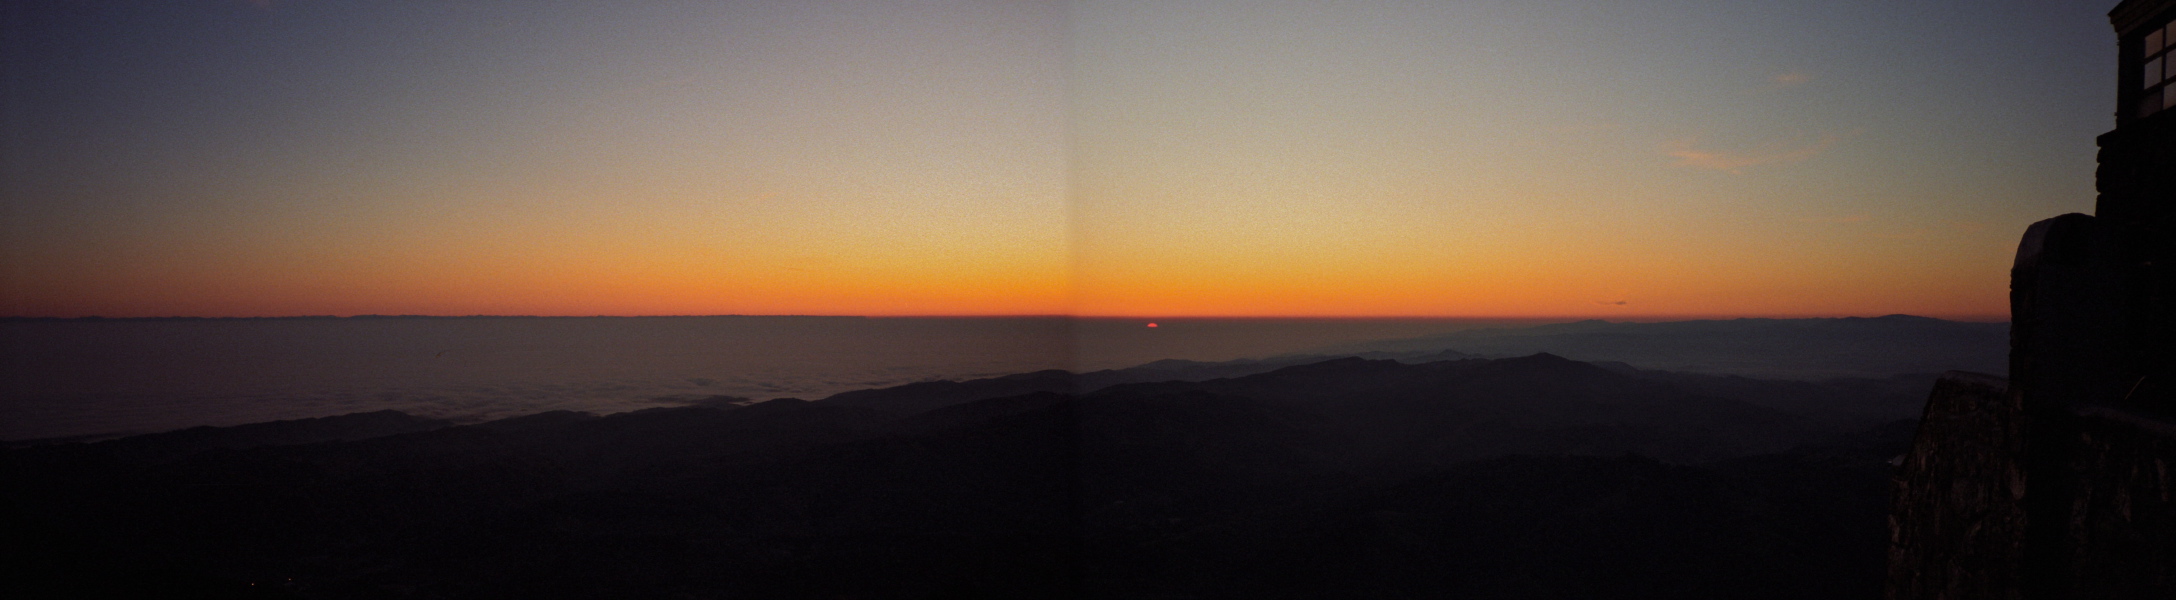 Sunrise panorama.